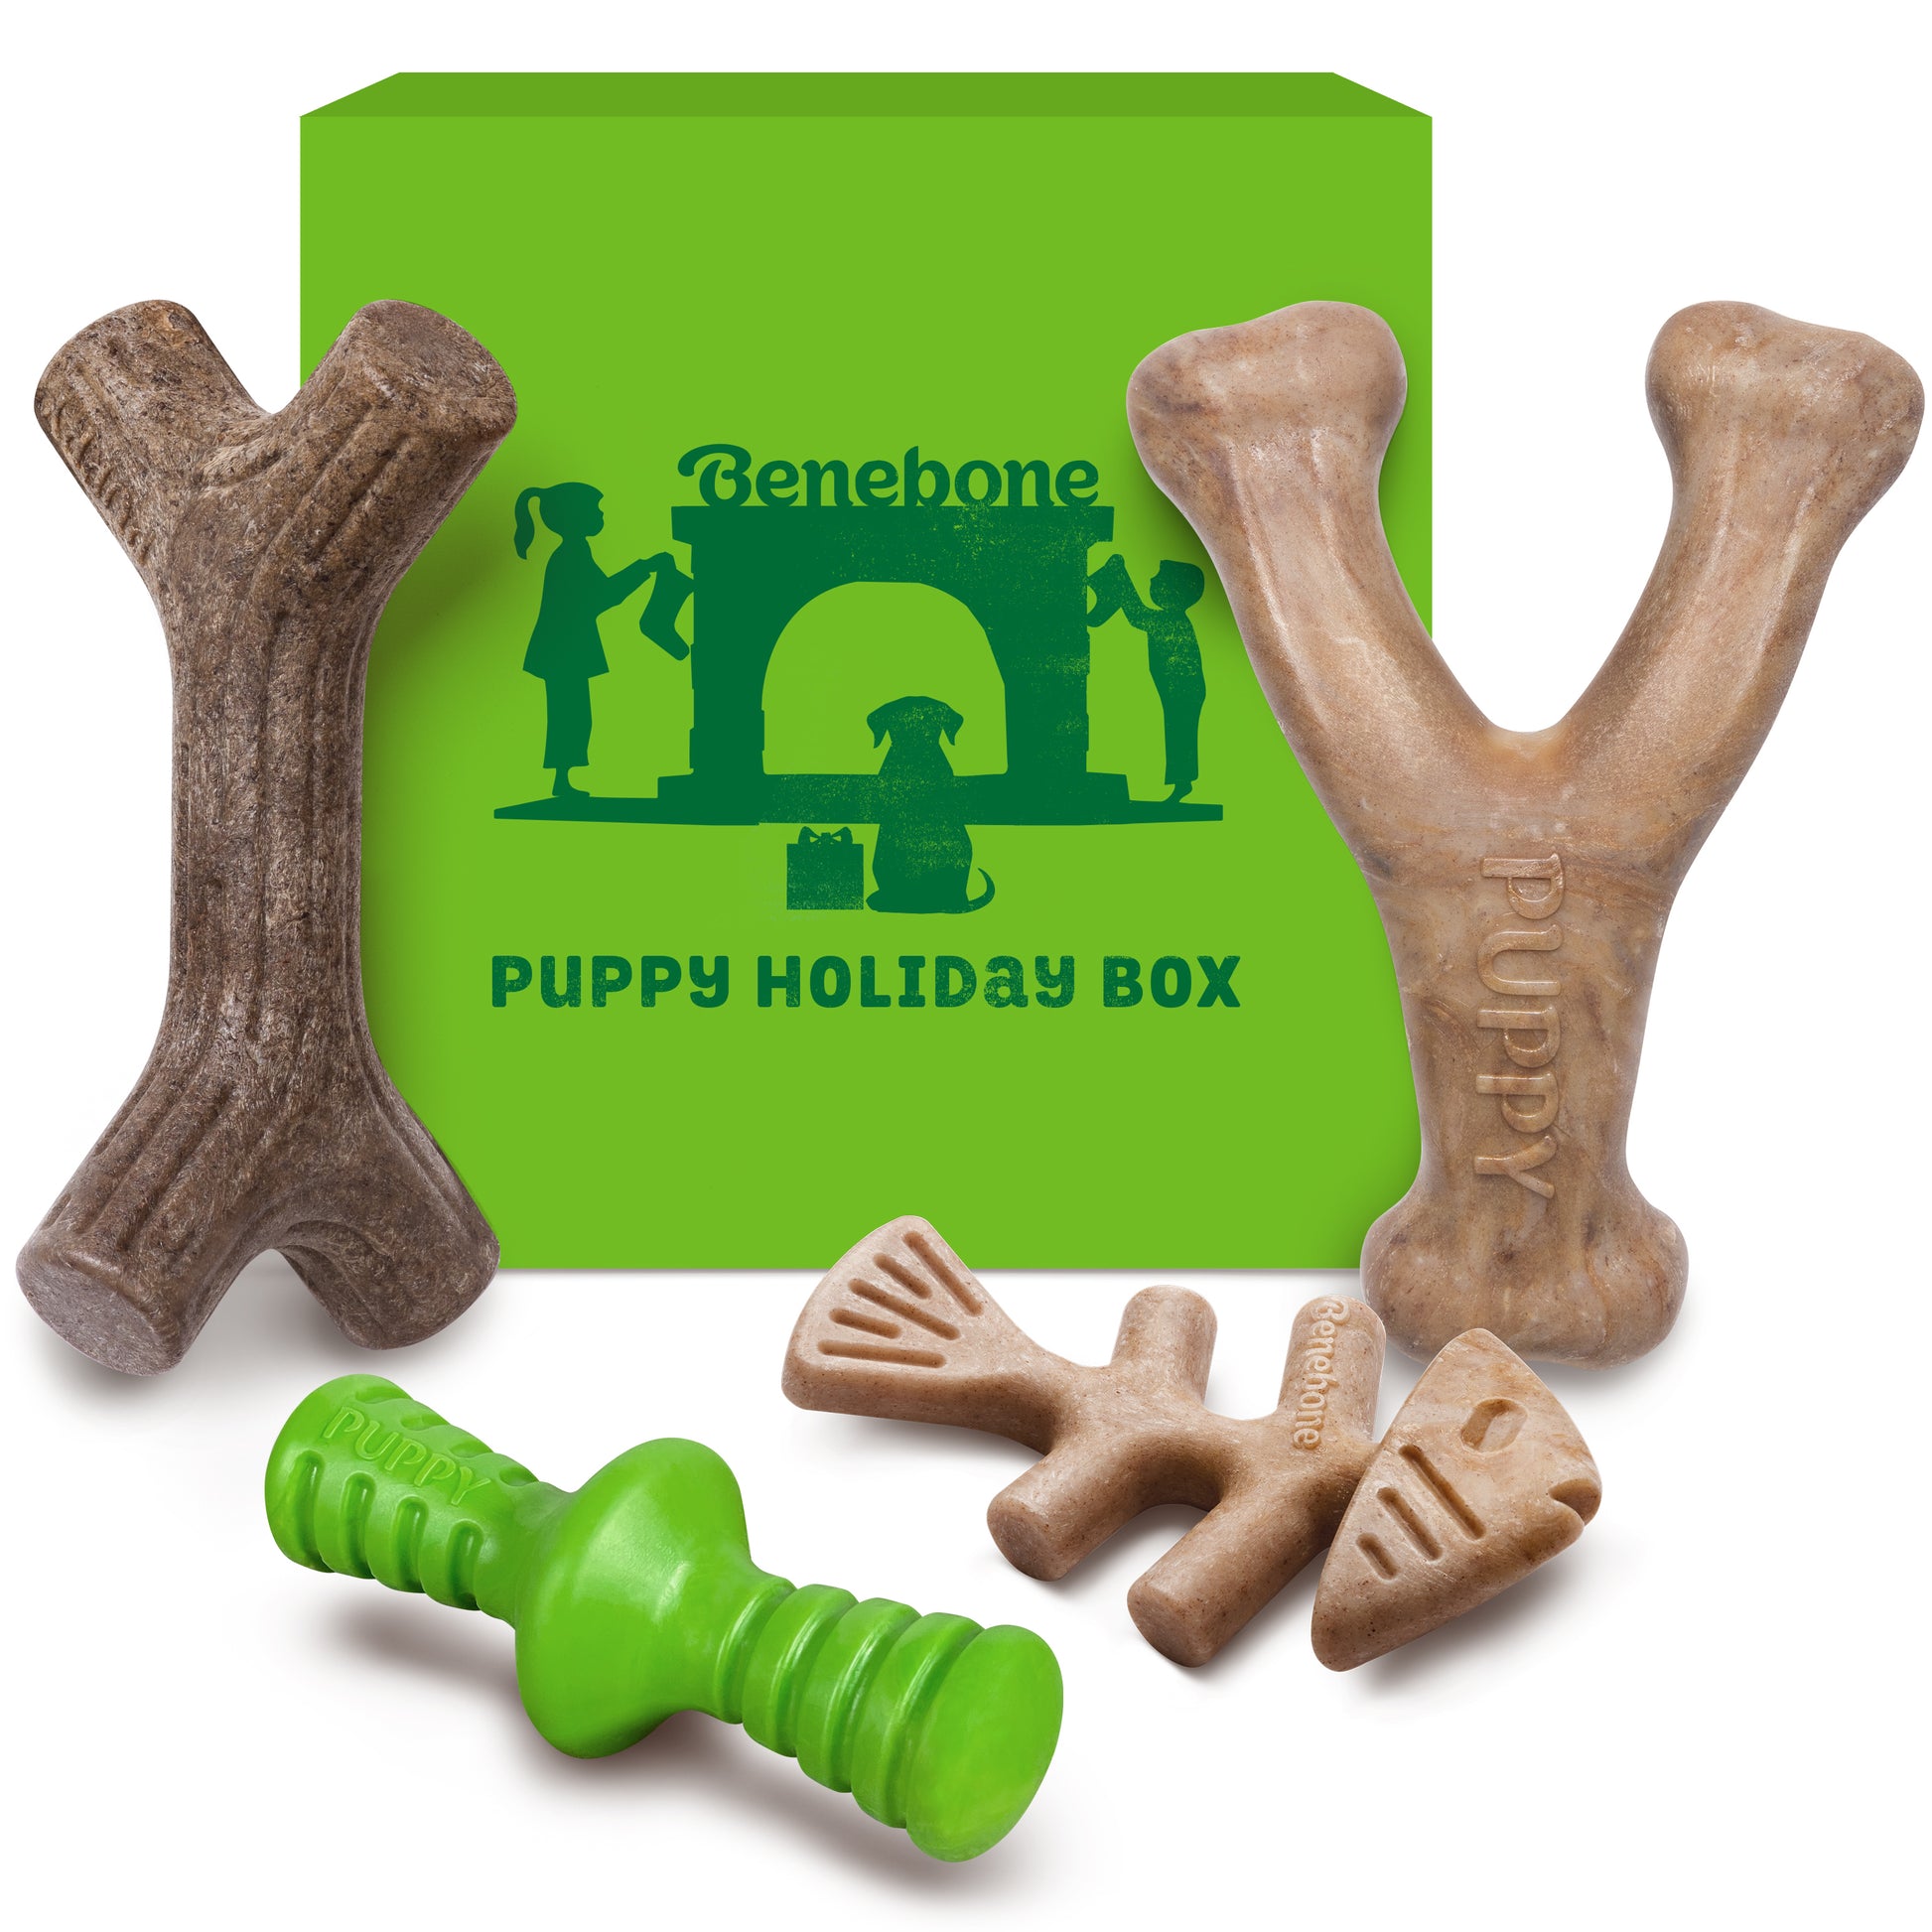 Benebone holiday gift box with puppy wishbone, maplestick, fishbone and rubber zaggler